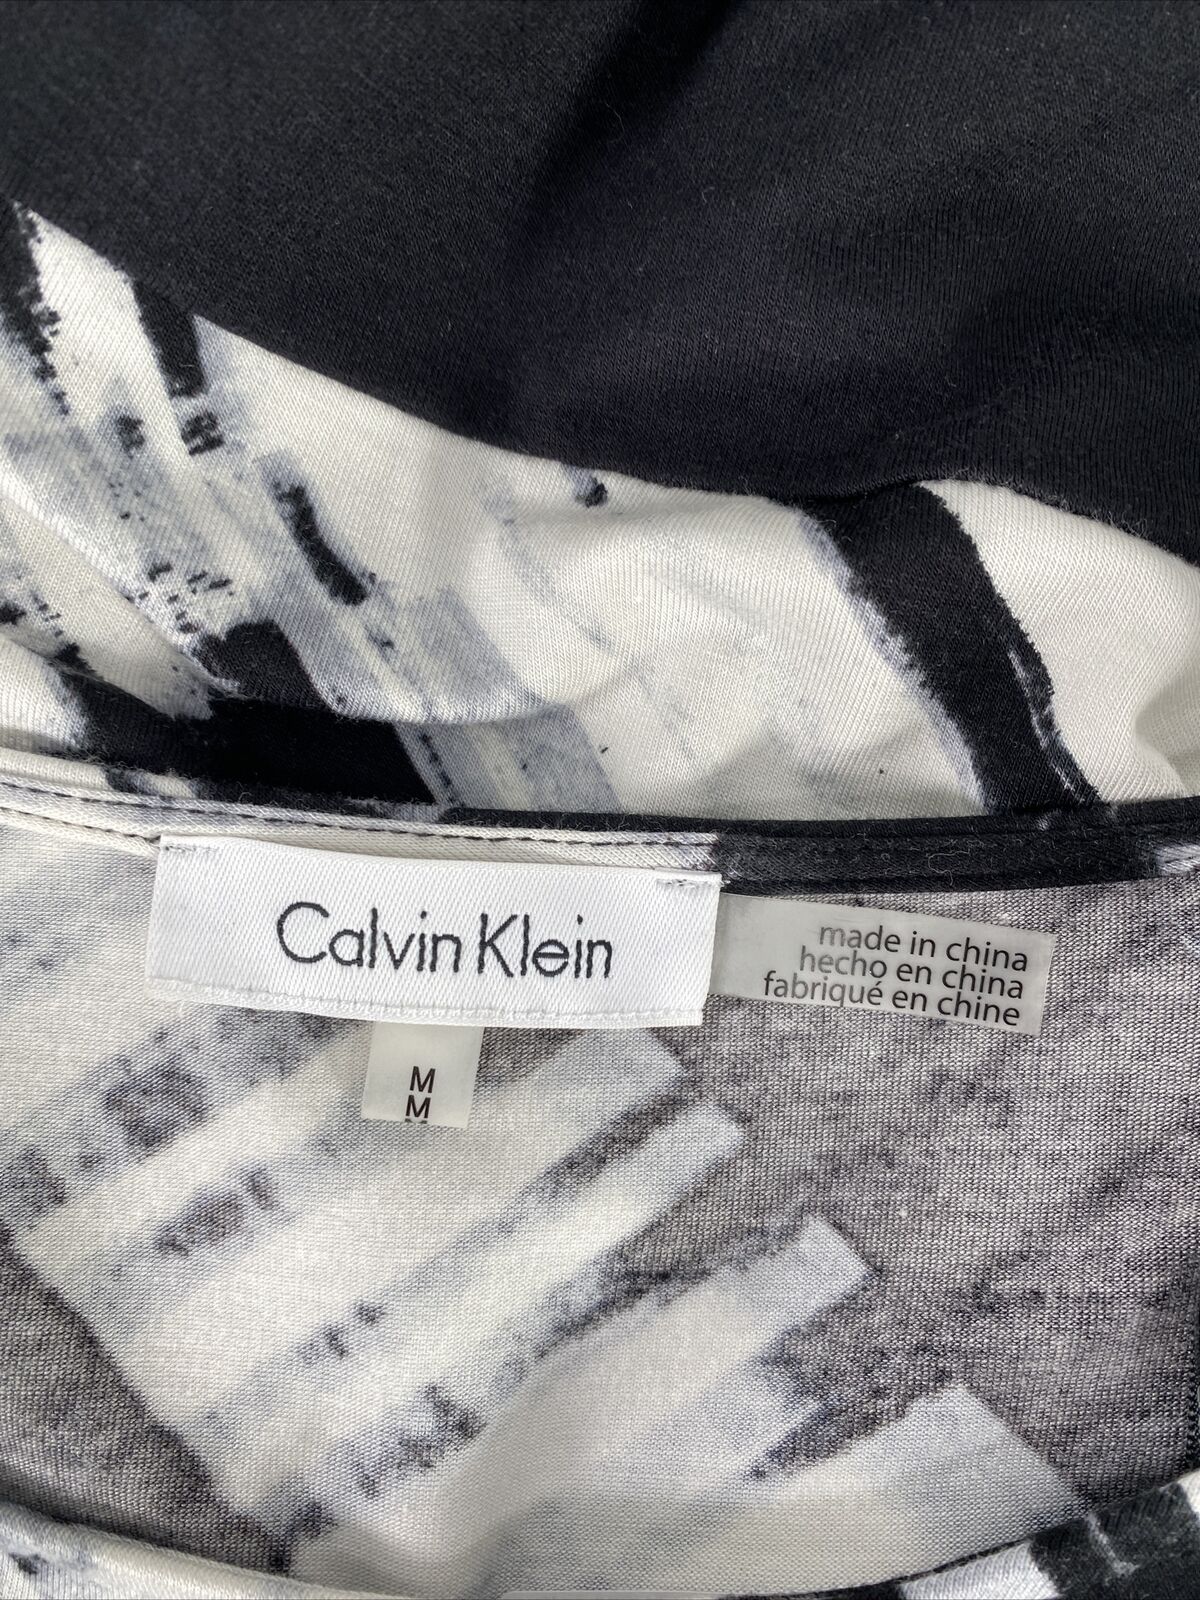 Calvin Klein Women's Black/White Long Sleeve Tunic Blouse - M